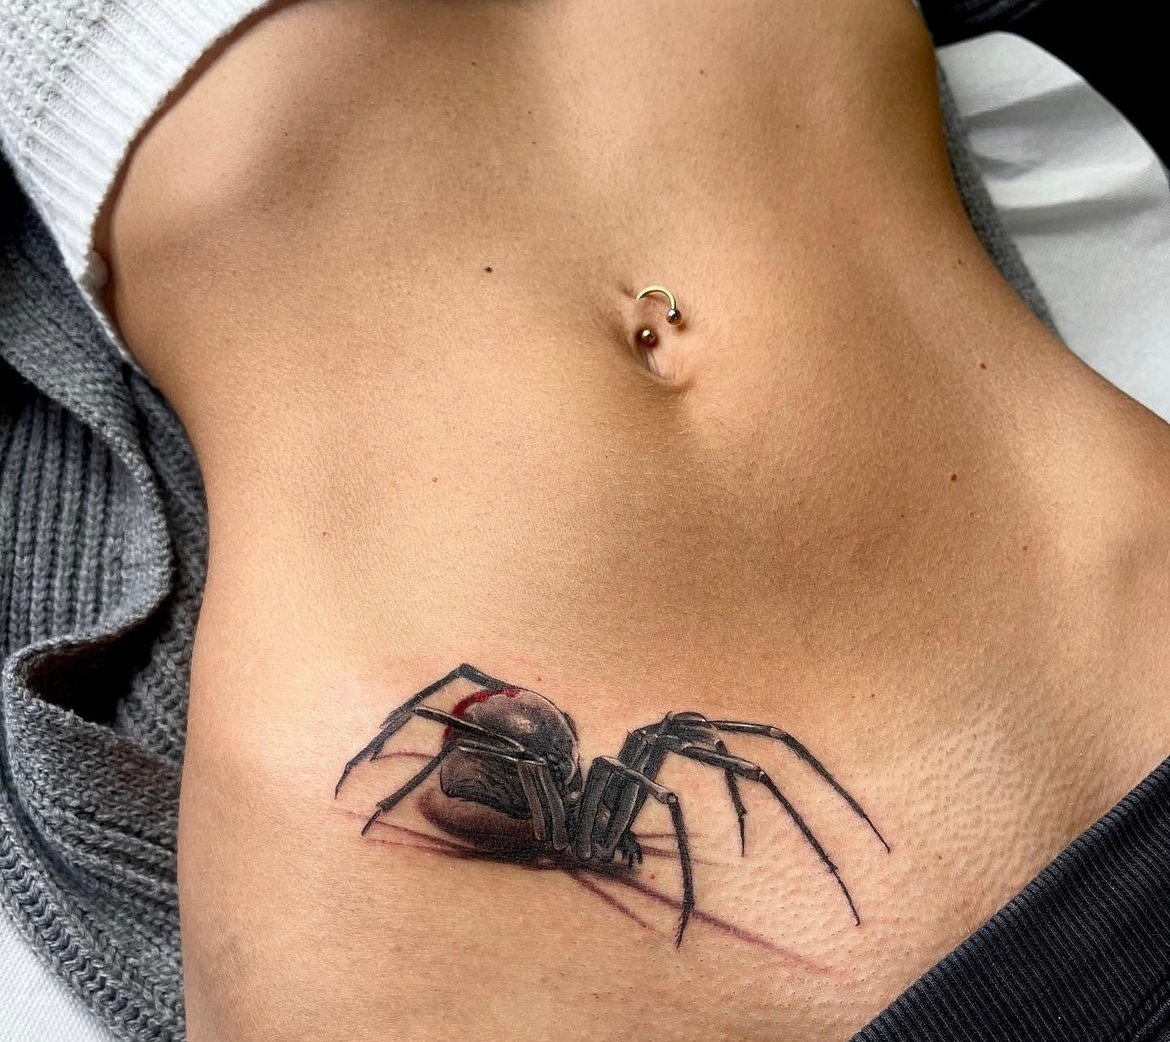 Best Spider Tattoo Designs  Our Top 10